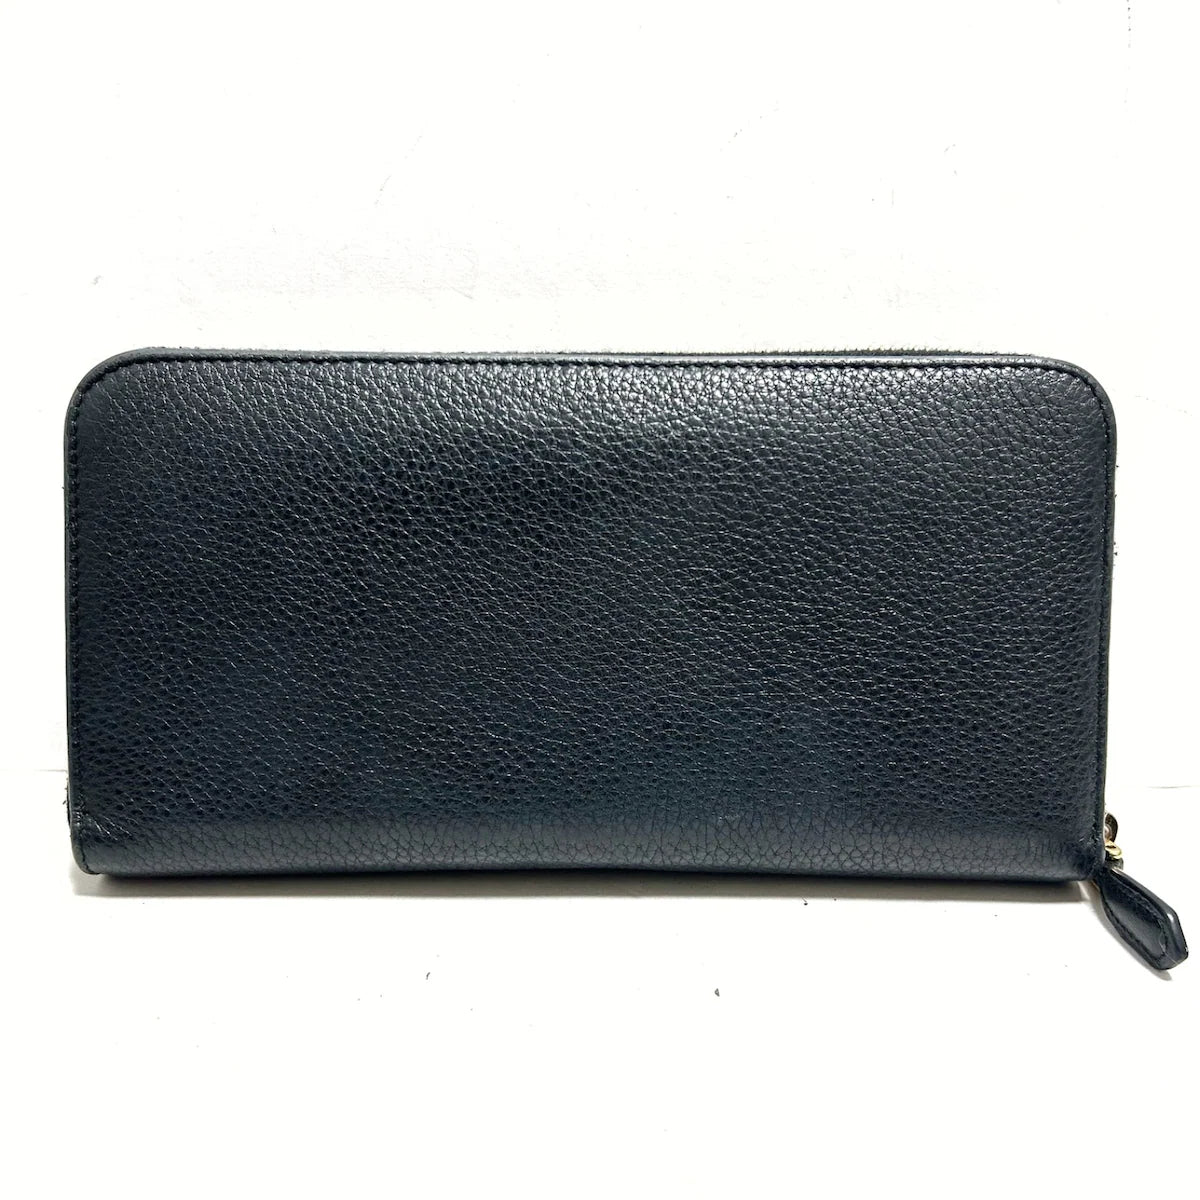 PRADA - Black Leather Long Wallet